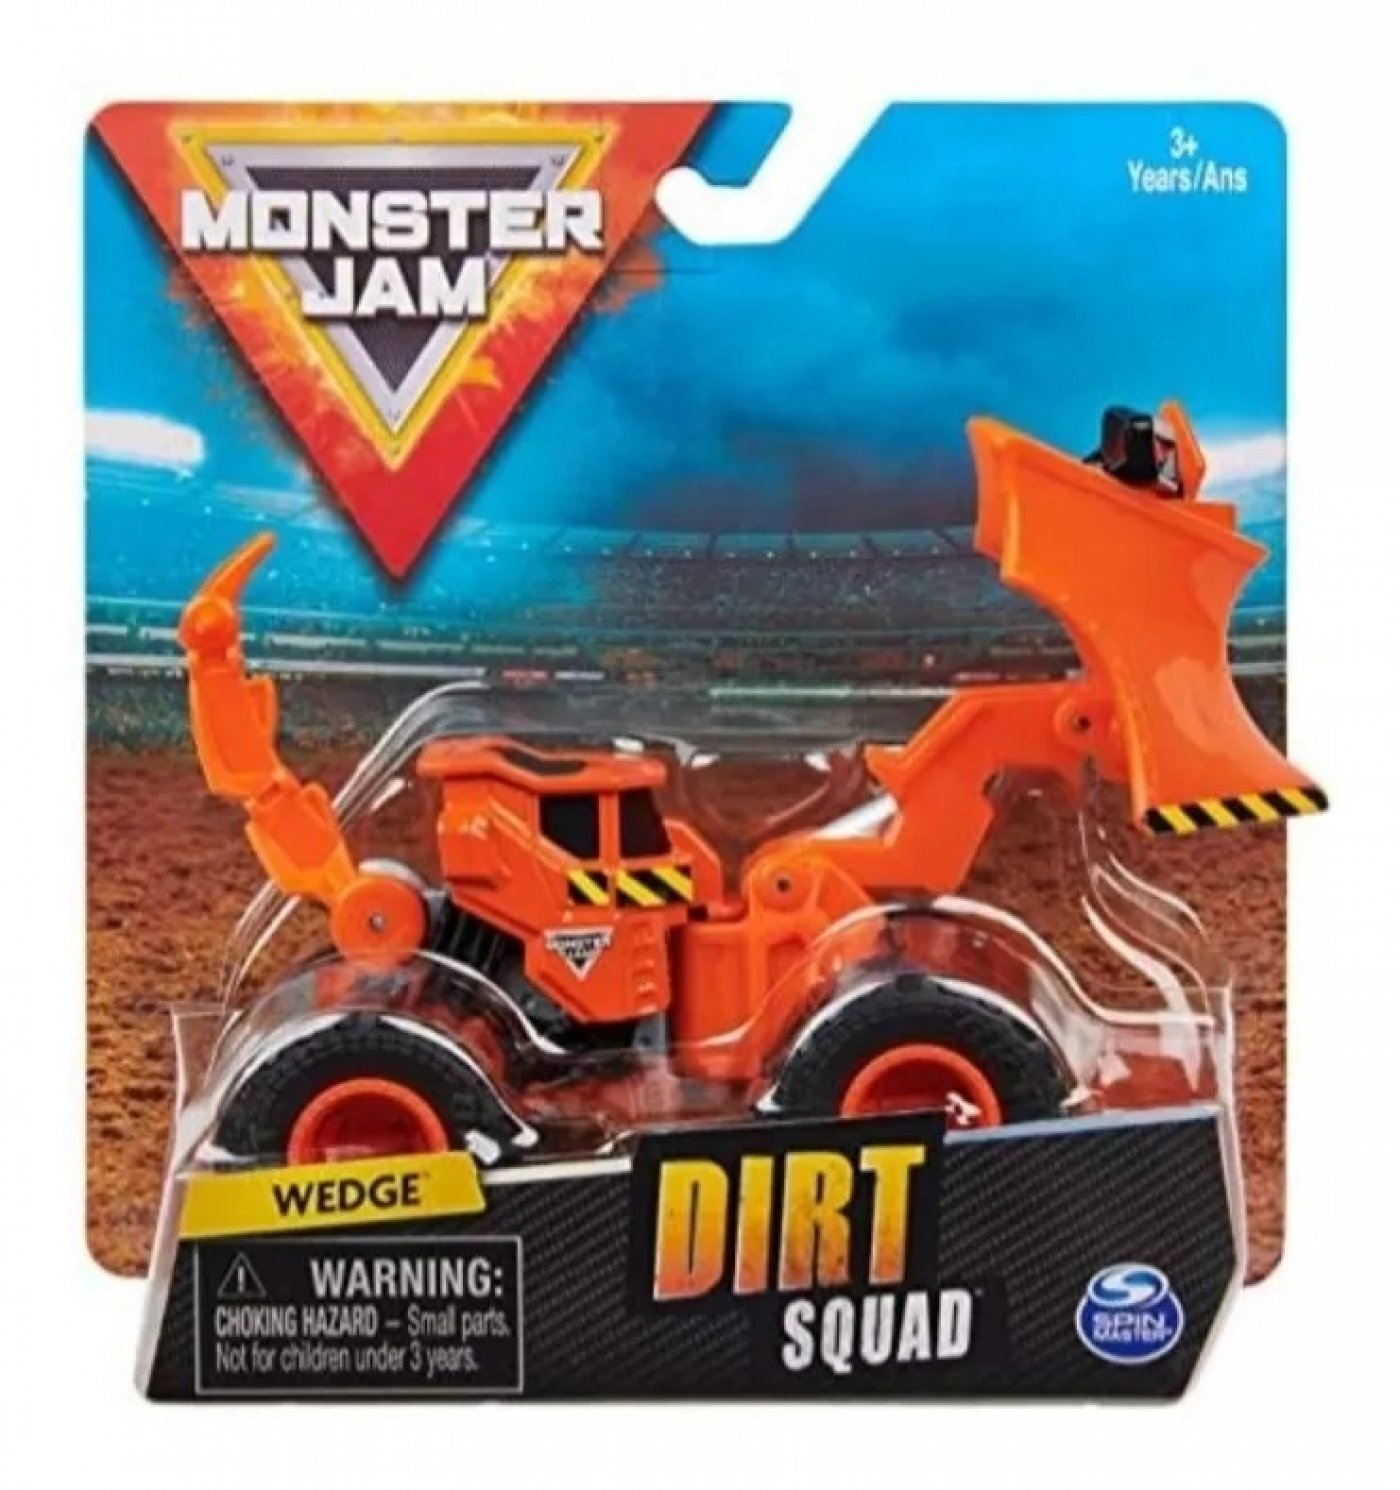 Monster Jam Dirt Squad Metal